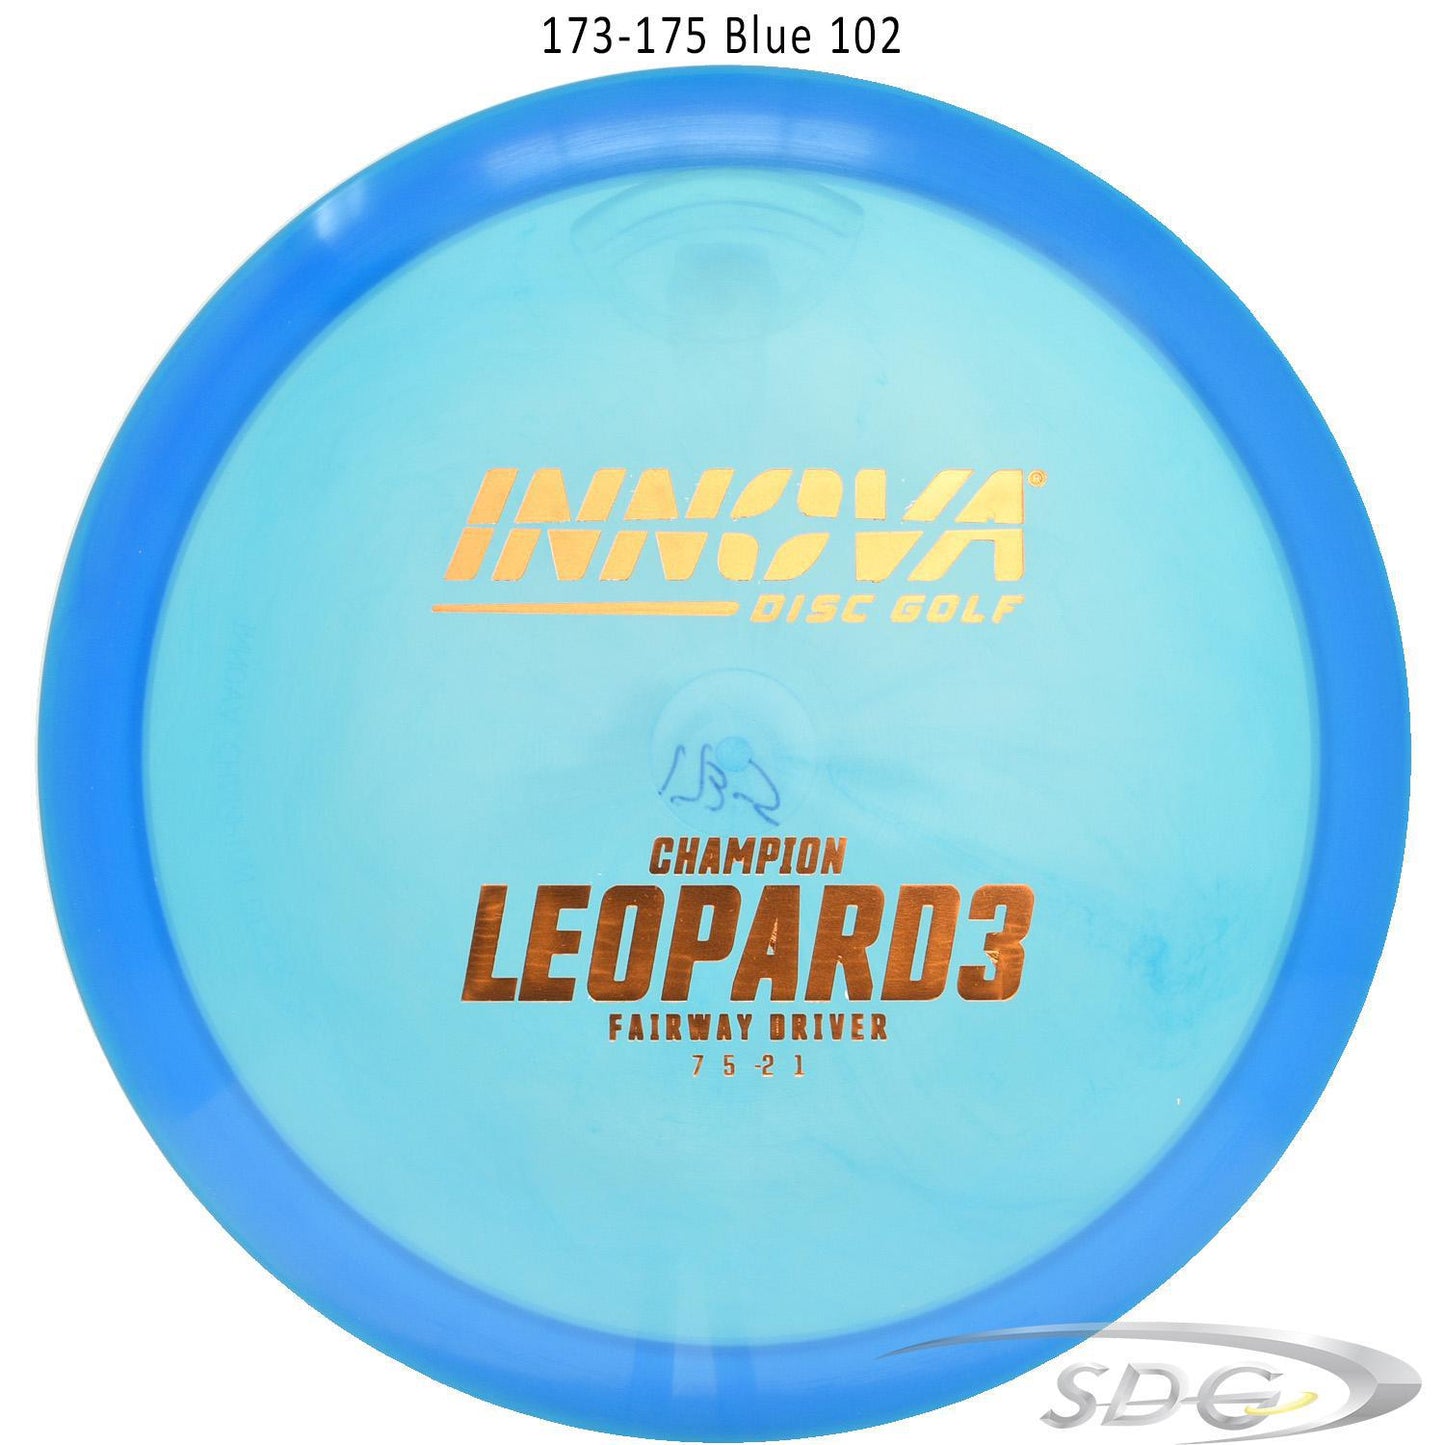 innova-champion-leopard3-disc-golf-fairway-driver 173-175 Blue 102 